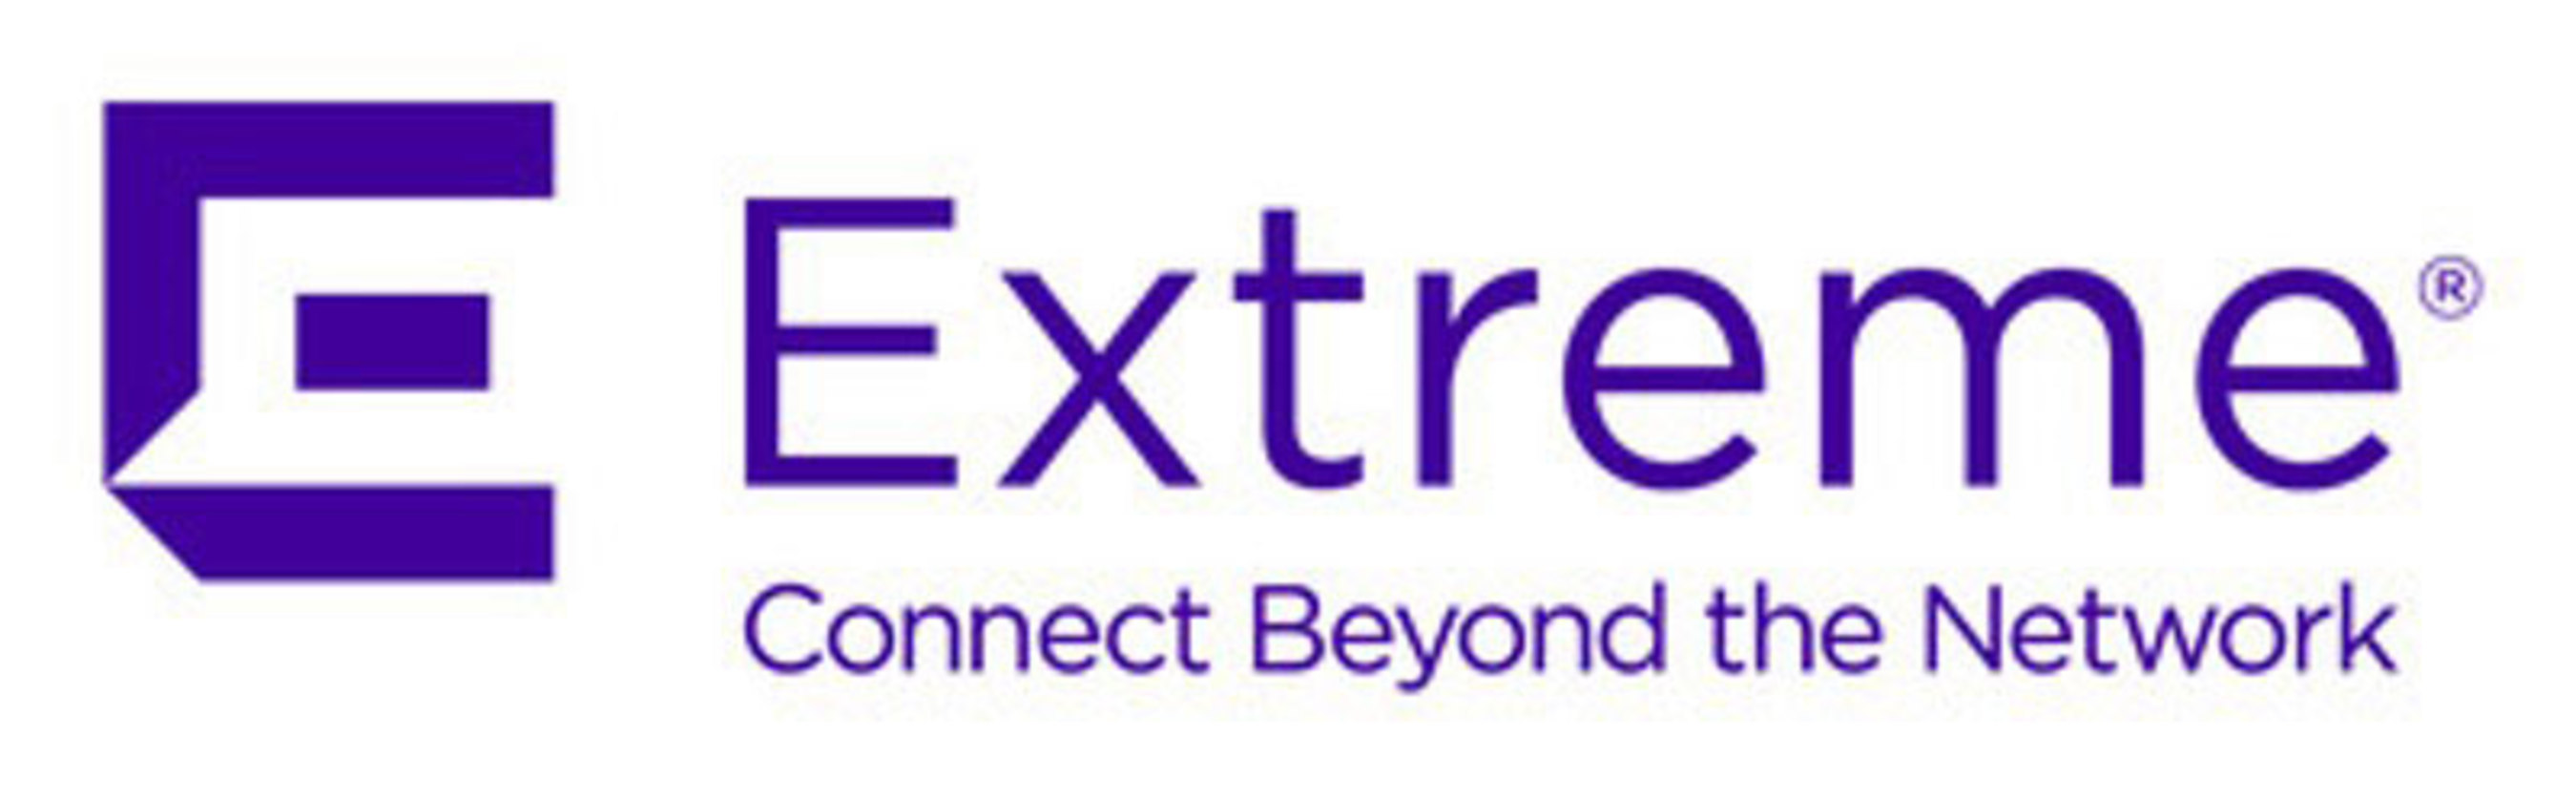 Extreme Networks Logo (PRNewsFoto/Extreme Networks) (PRNewsFoto/Extreme Networks)